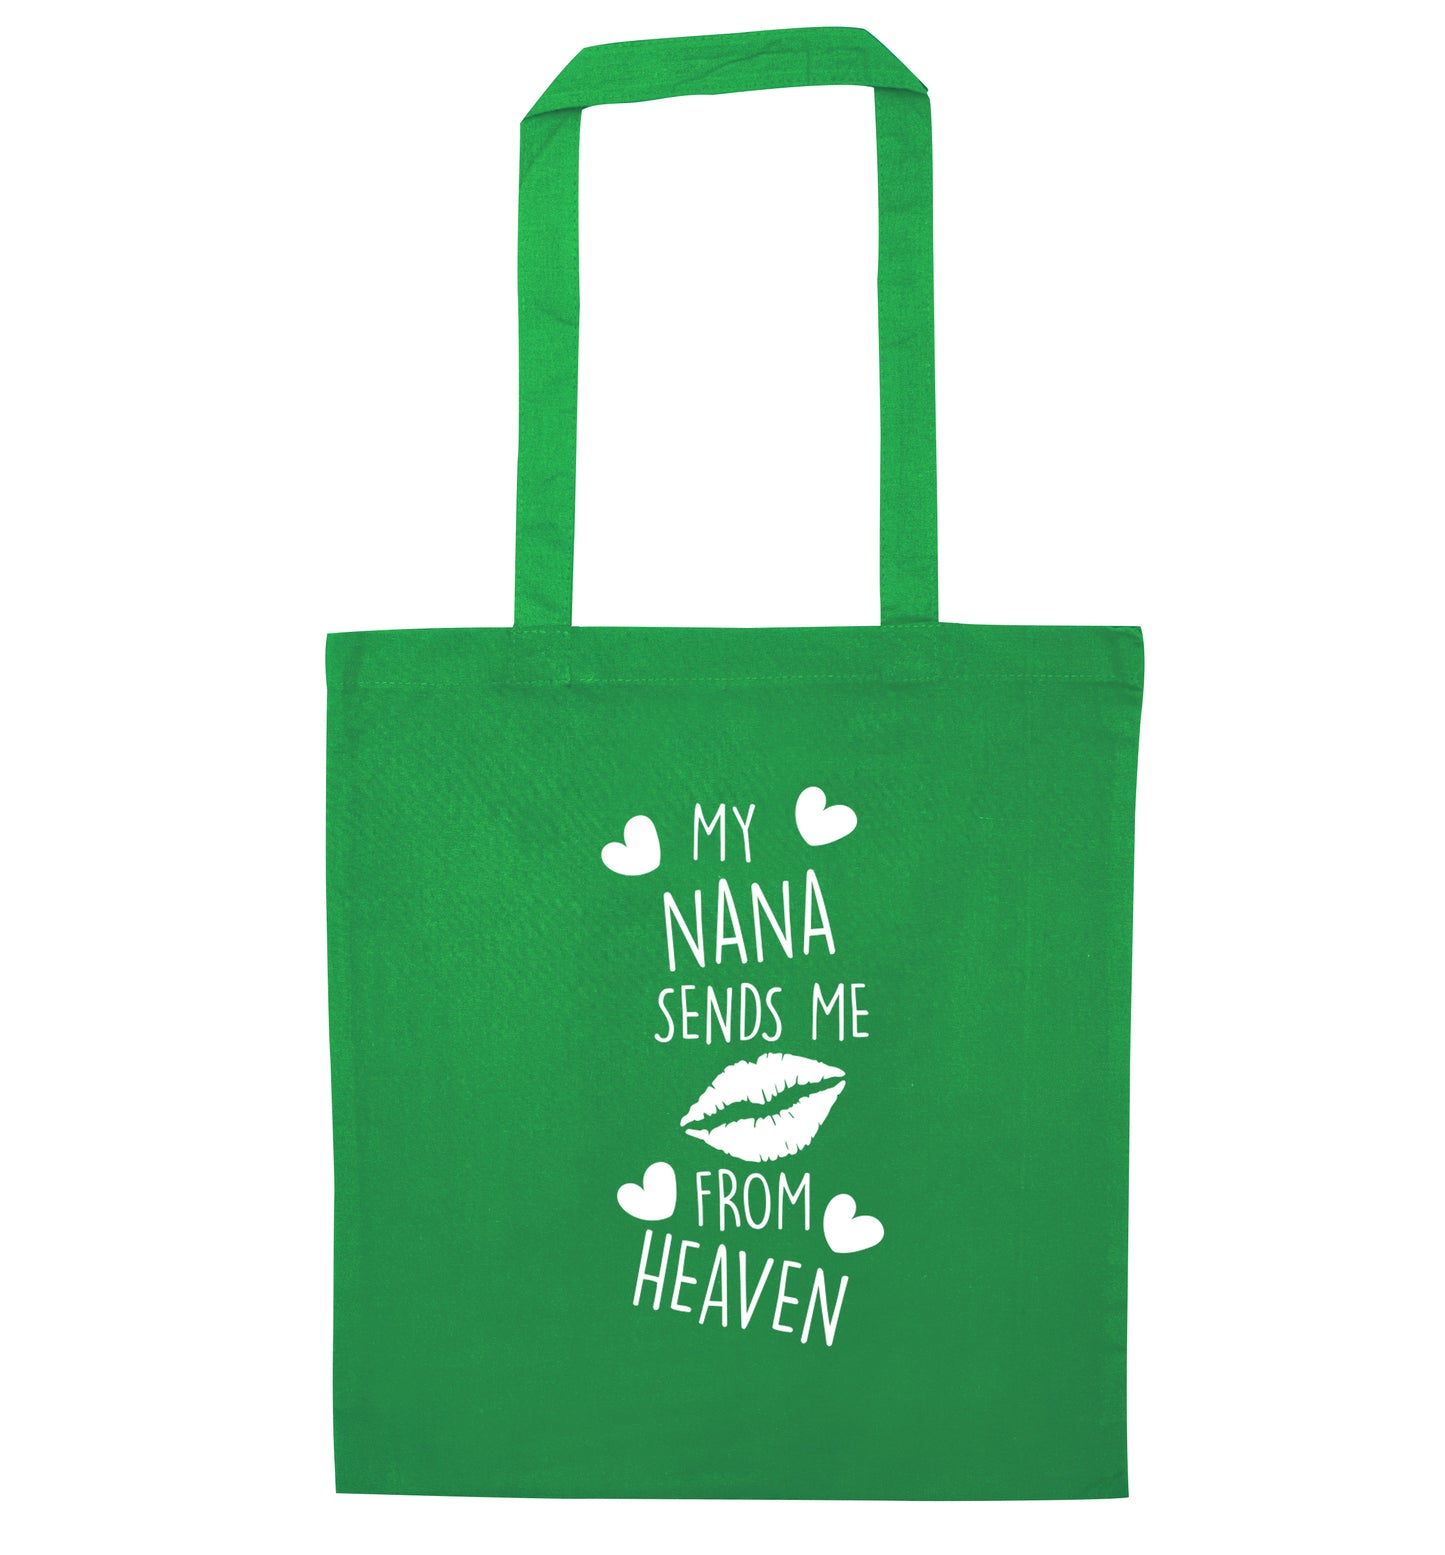 My nana sends me kisses from heaven green tote bag